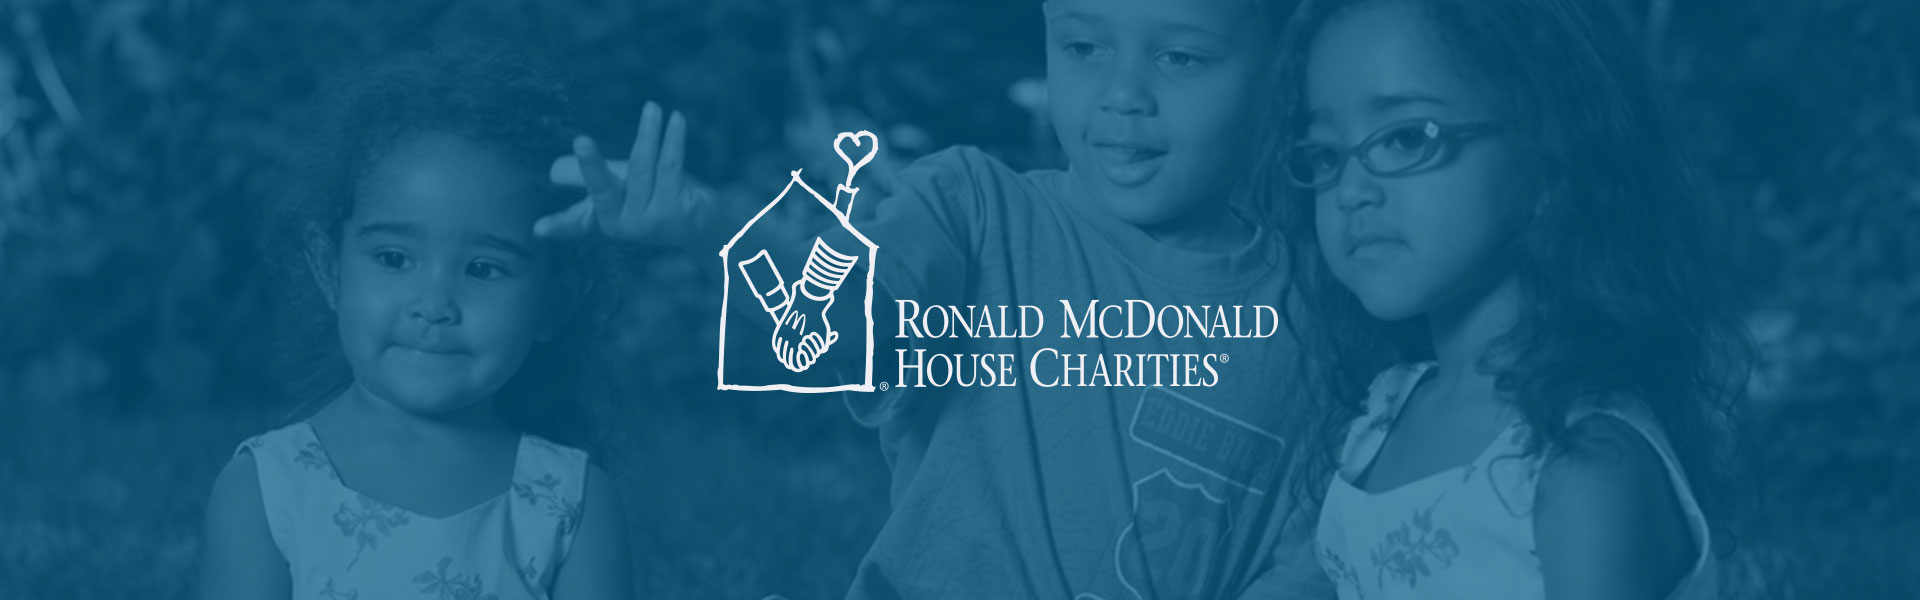 Ronald McDonald House Charities Dayton, Ohio